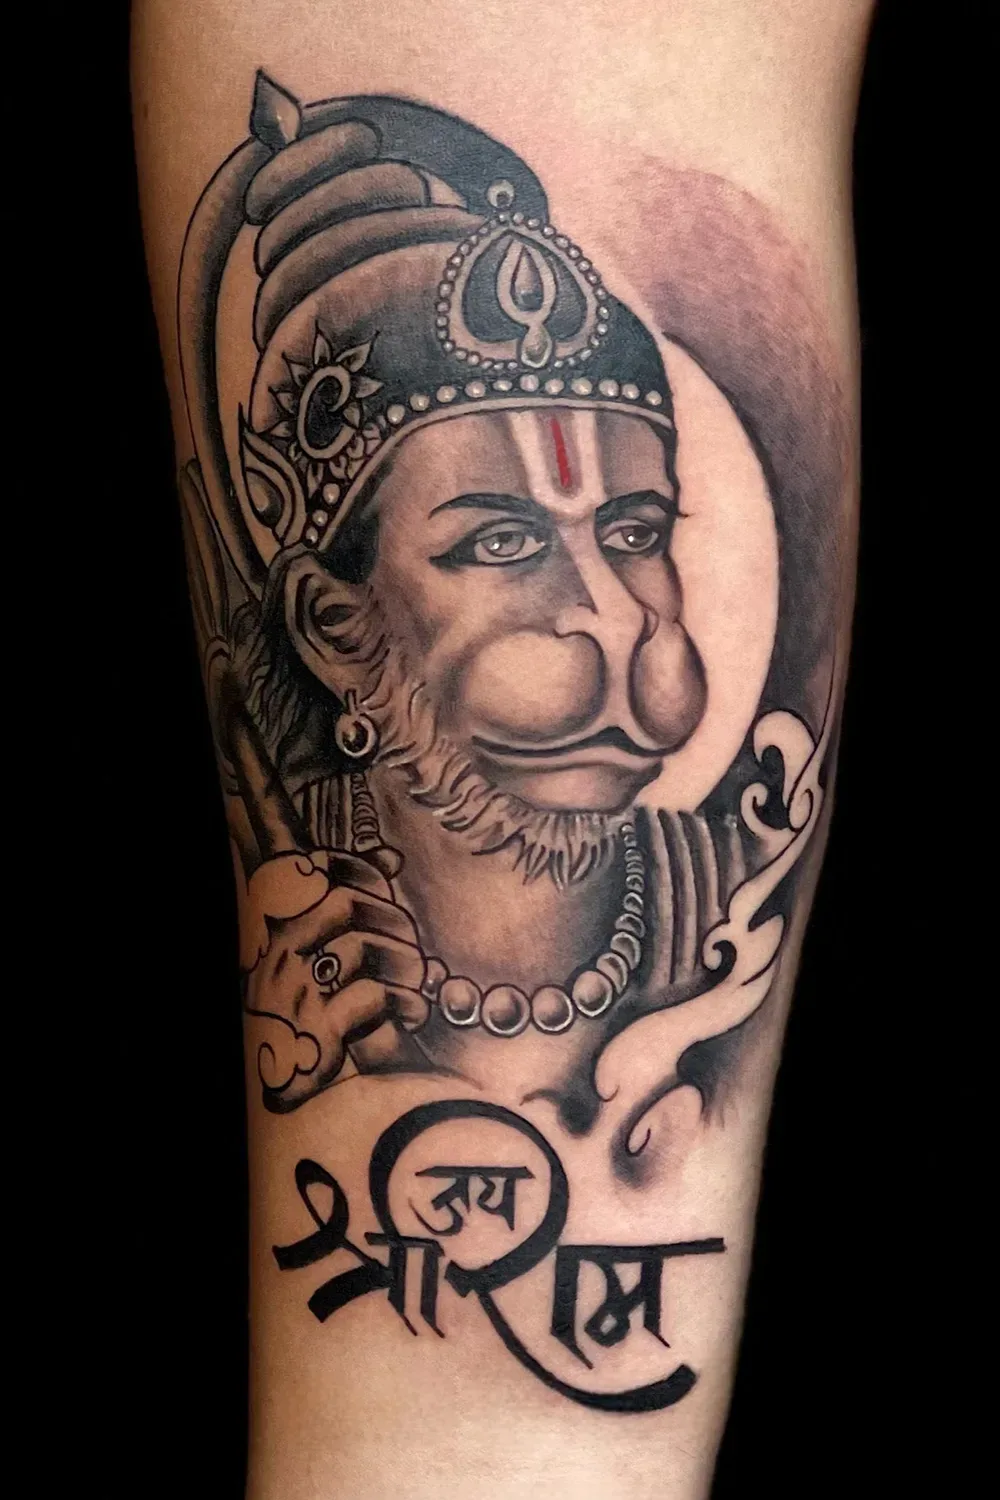 Xpose Tattoos Jaipur on LinkedIn: #trishul #omnahasshivay #tattoo #power  #strength #hinduism #inspiration…